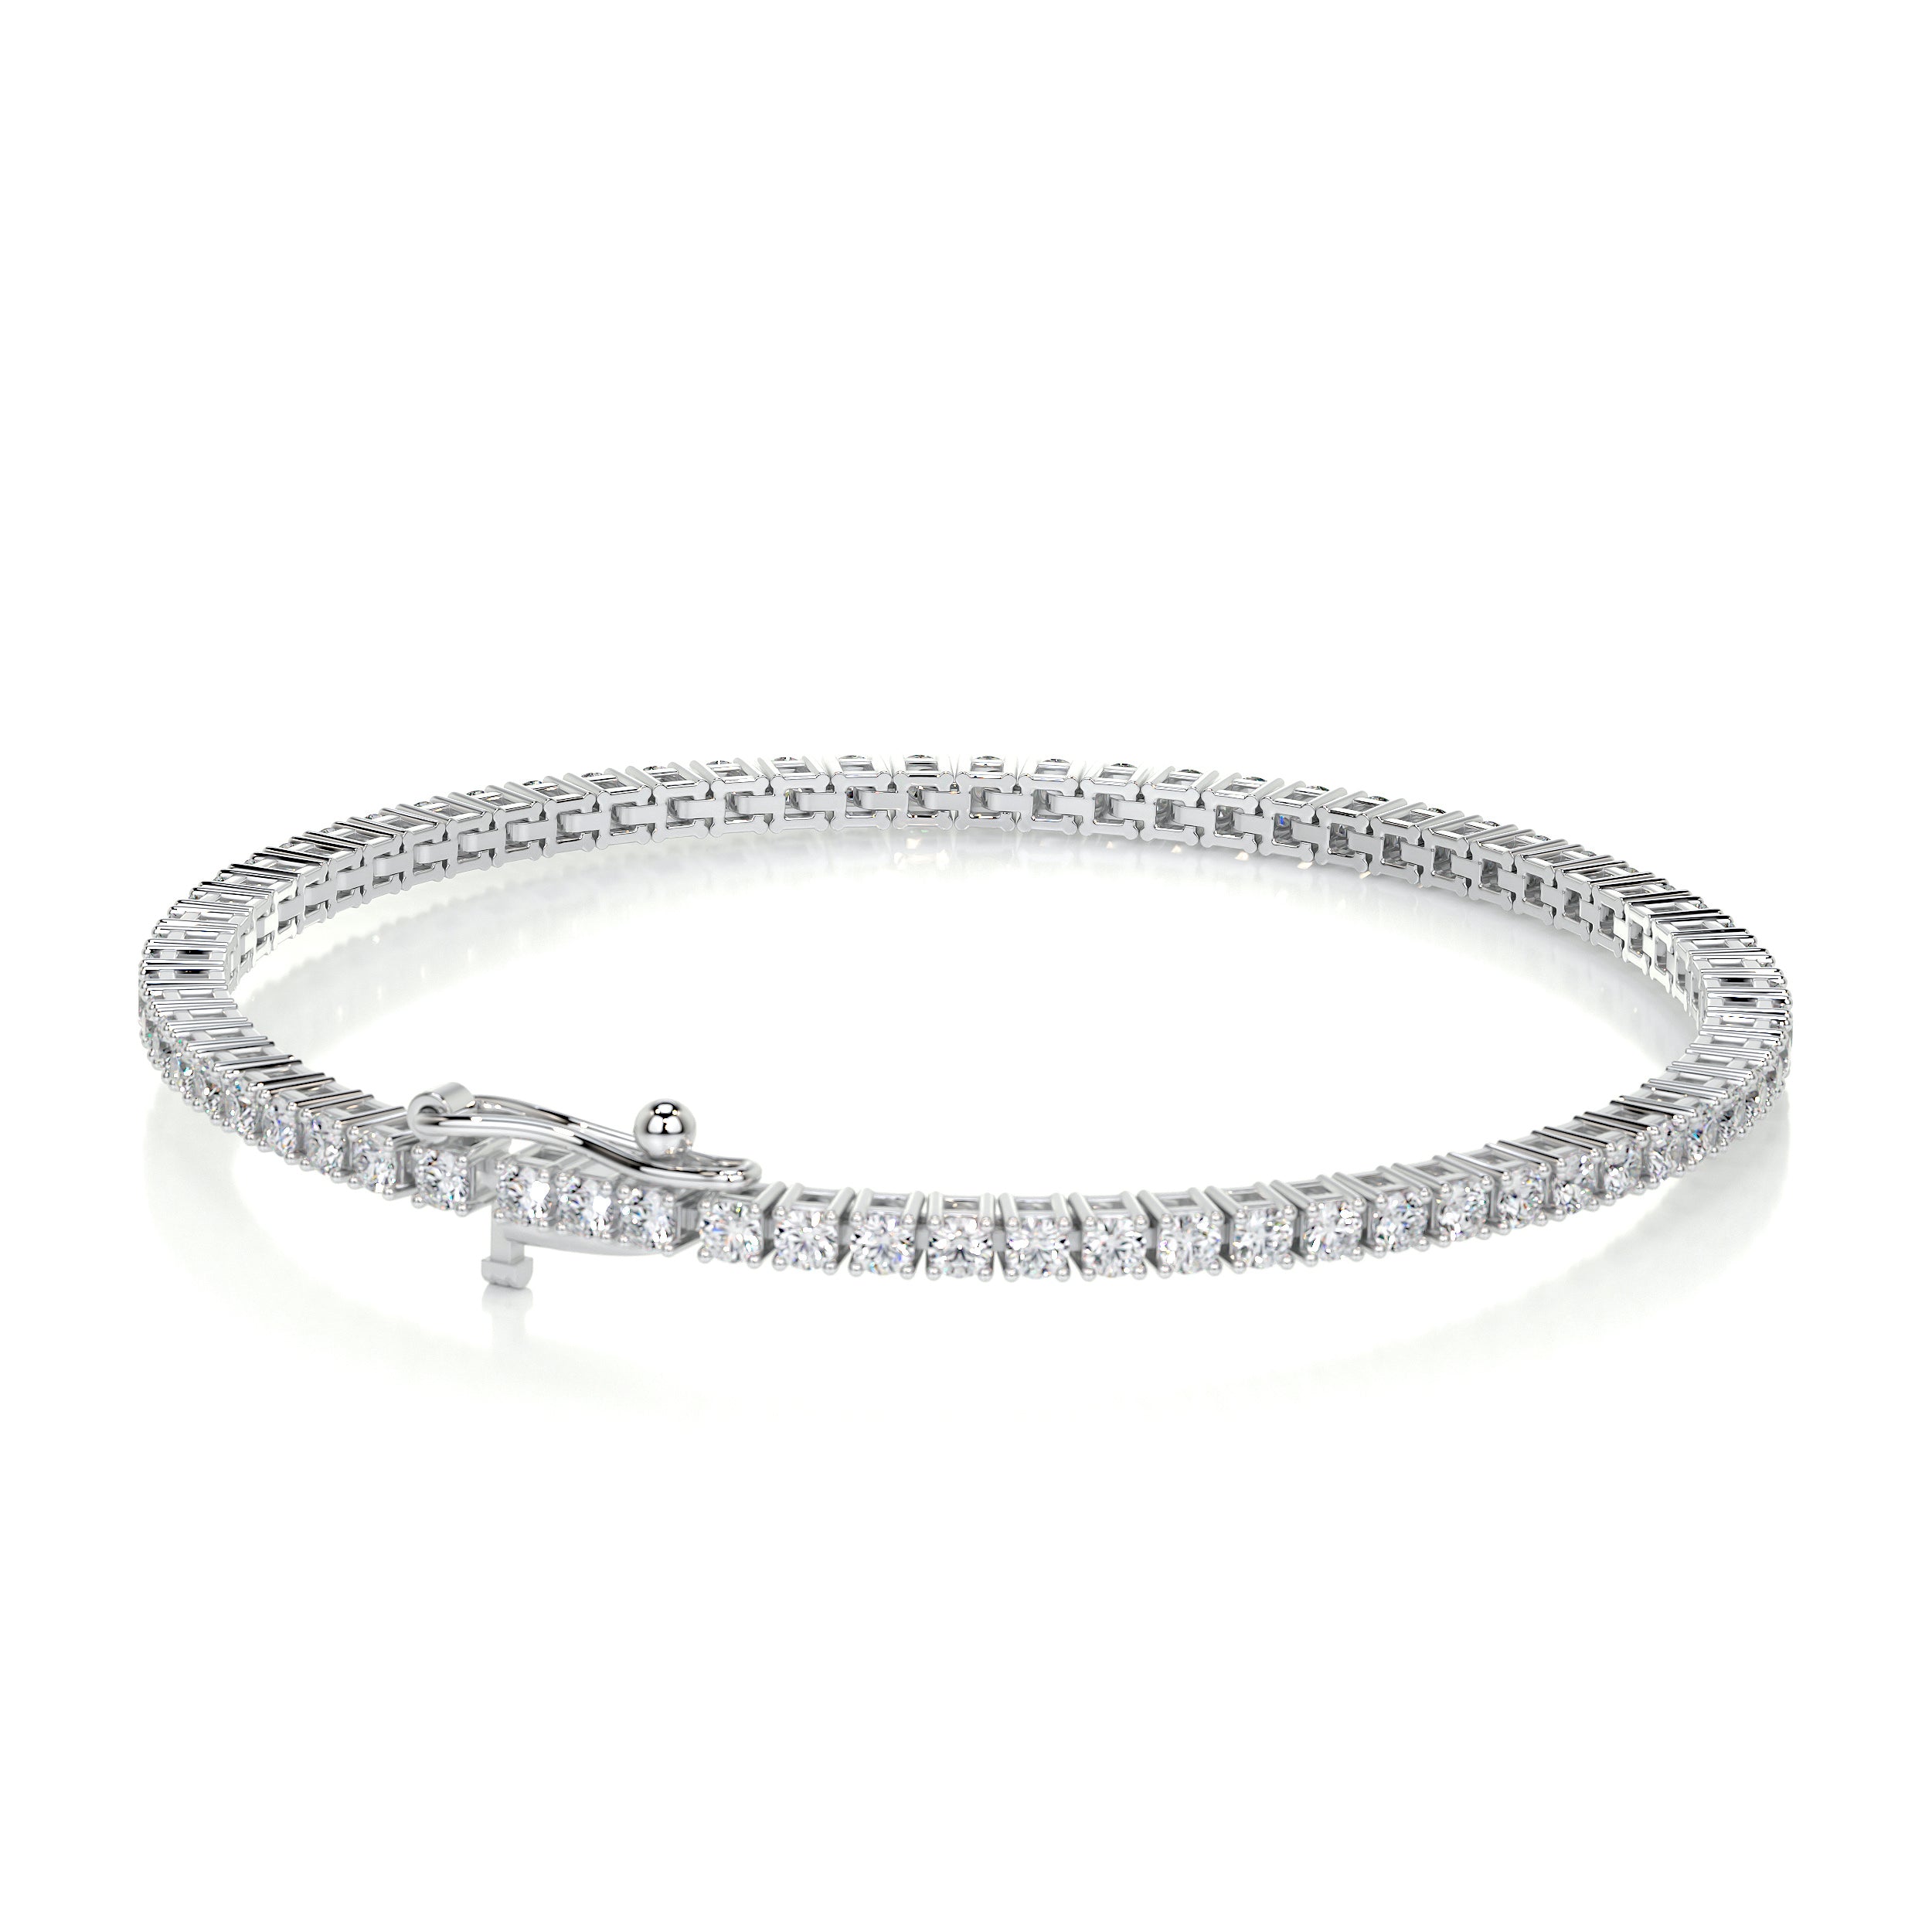 Sidney Tennis Lab Grown Diamonds Bracelet   (2.5 Carat) -18K White Gold